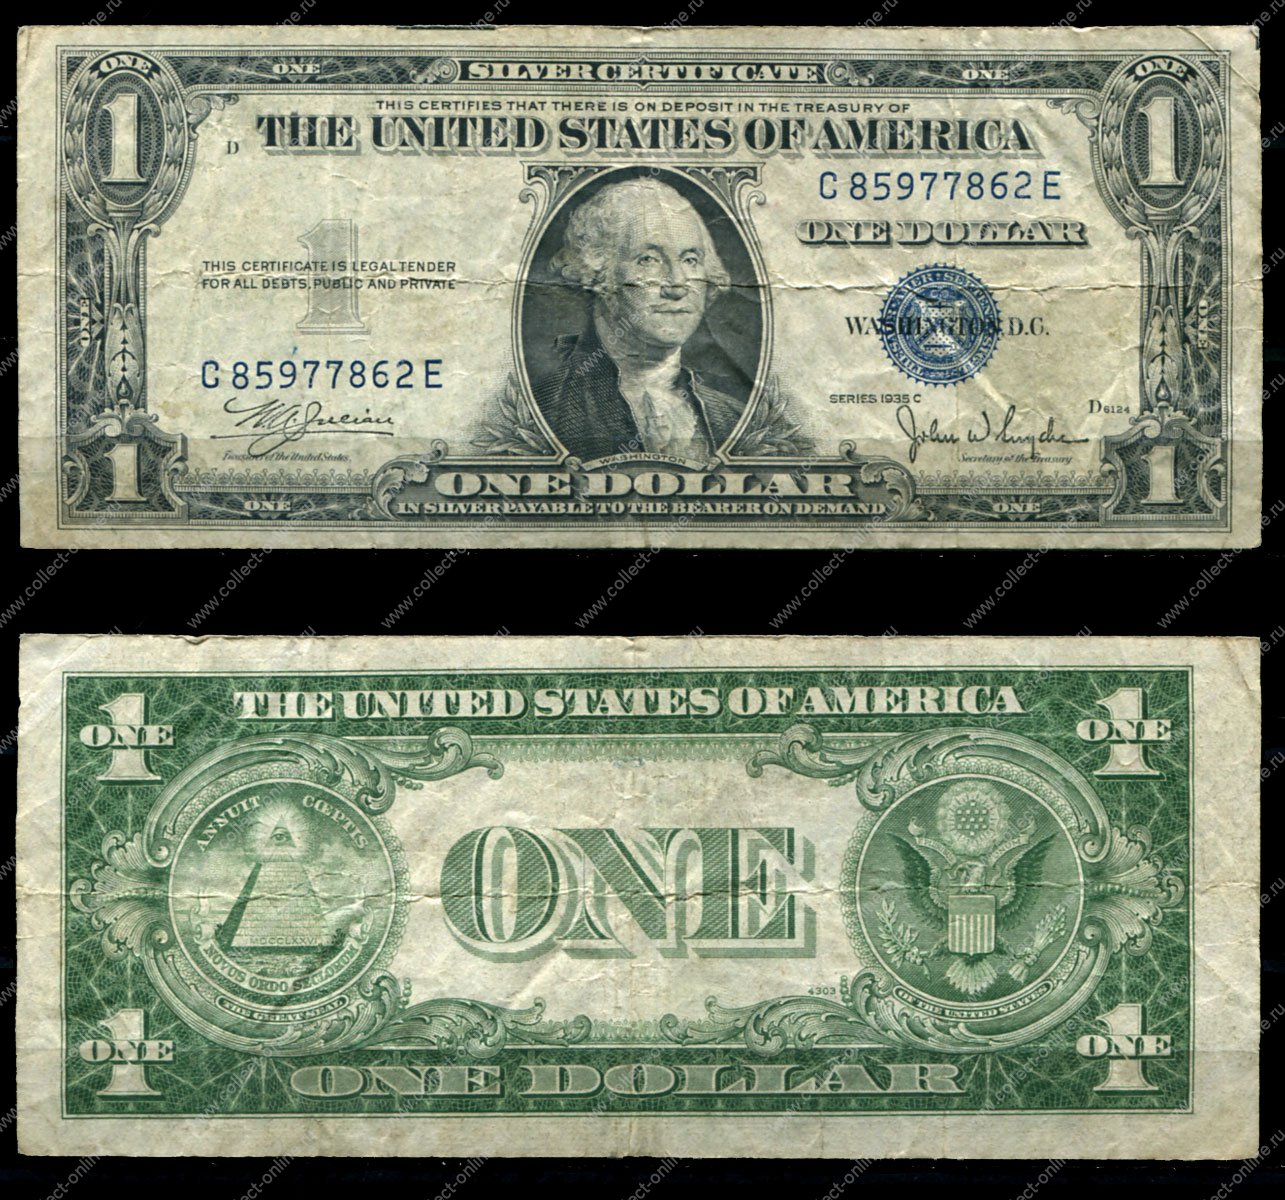 Доллар ис. Как выглядит один доллар США. Доллар купюра 1 доллар. Как выглядит 1 доллар США купюра. Долларовая купюра 1 доллар.